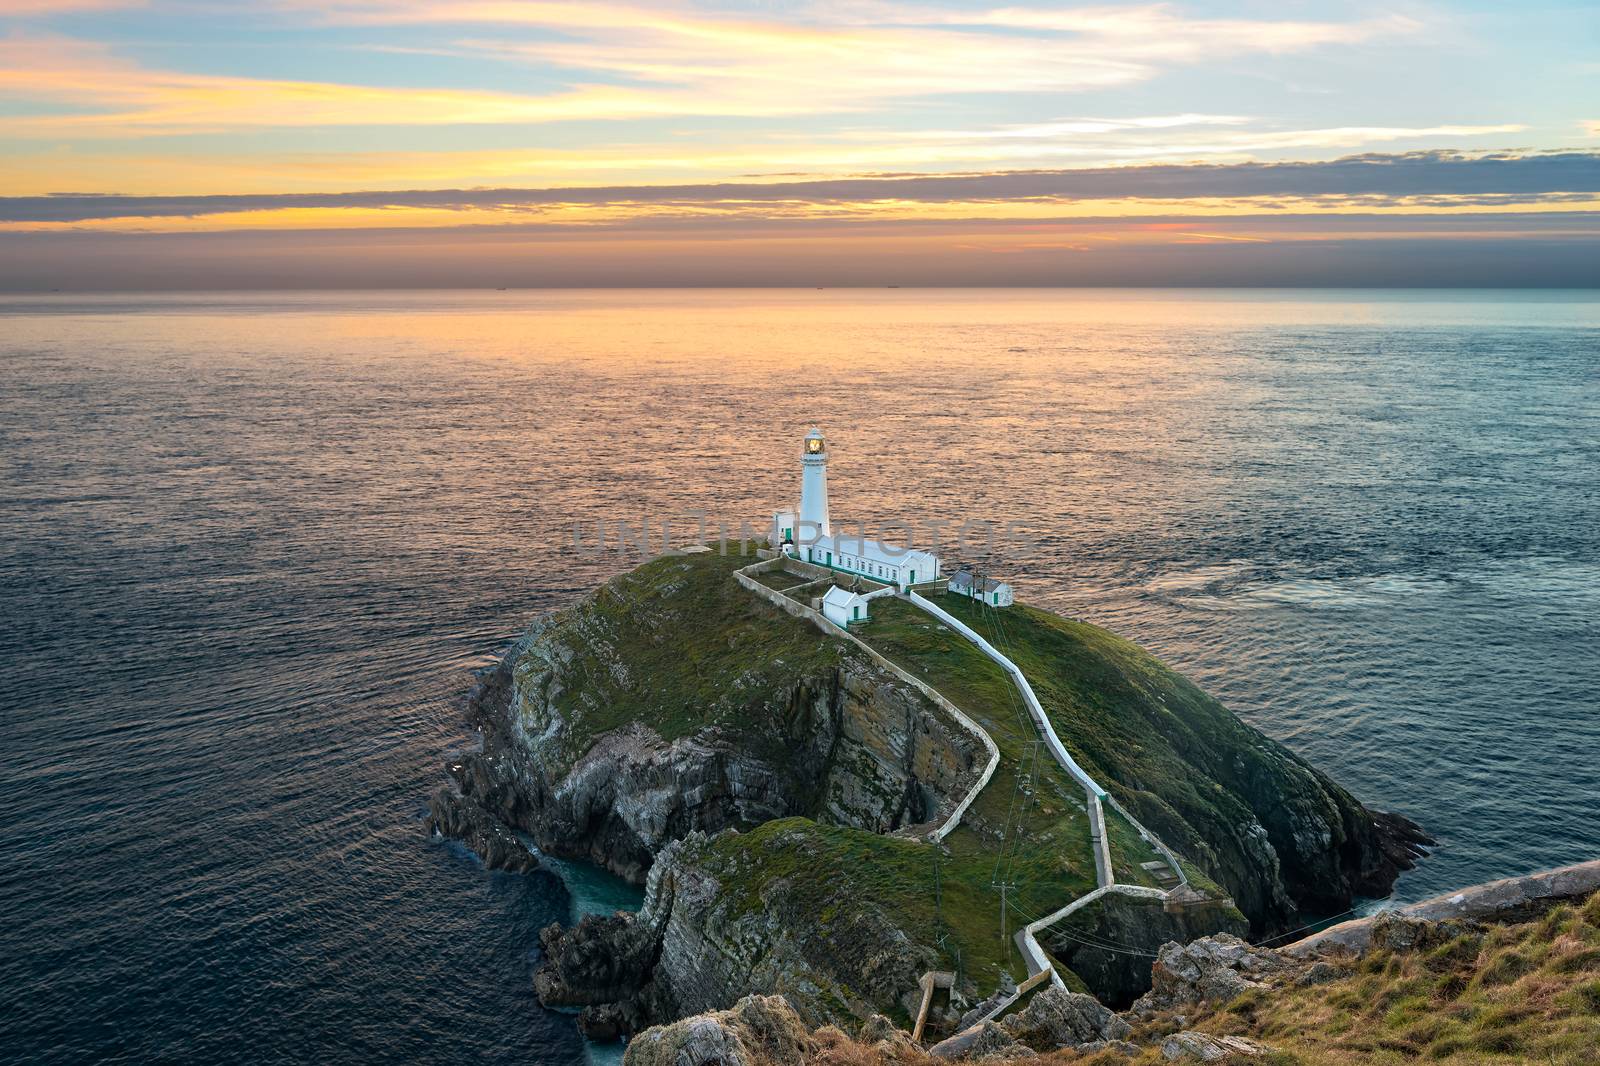 Holyhead, Wales, United Kingdom - September 17, 2016: South stack lighthouse on Holy Island at sunset